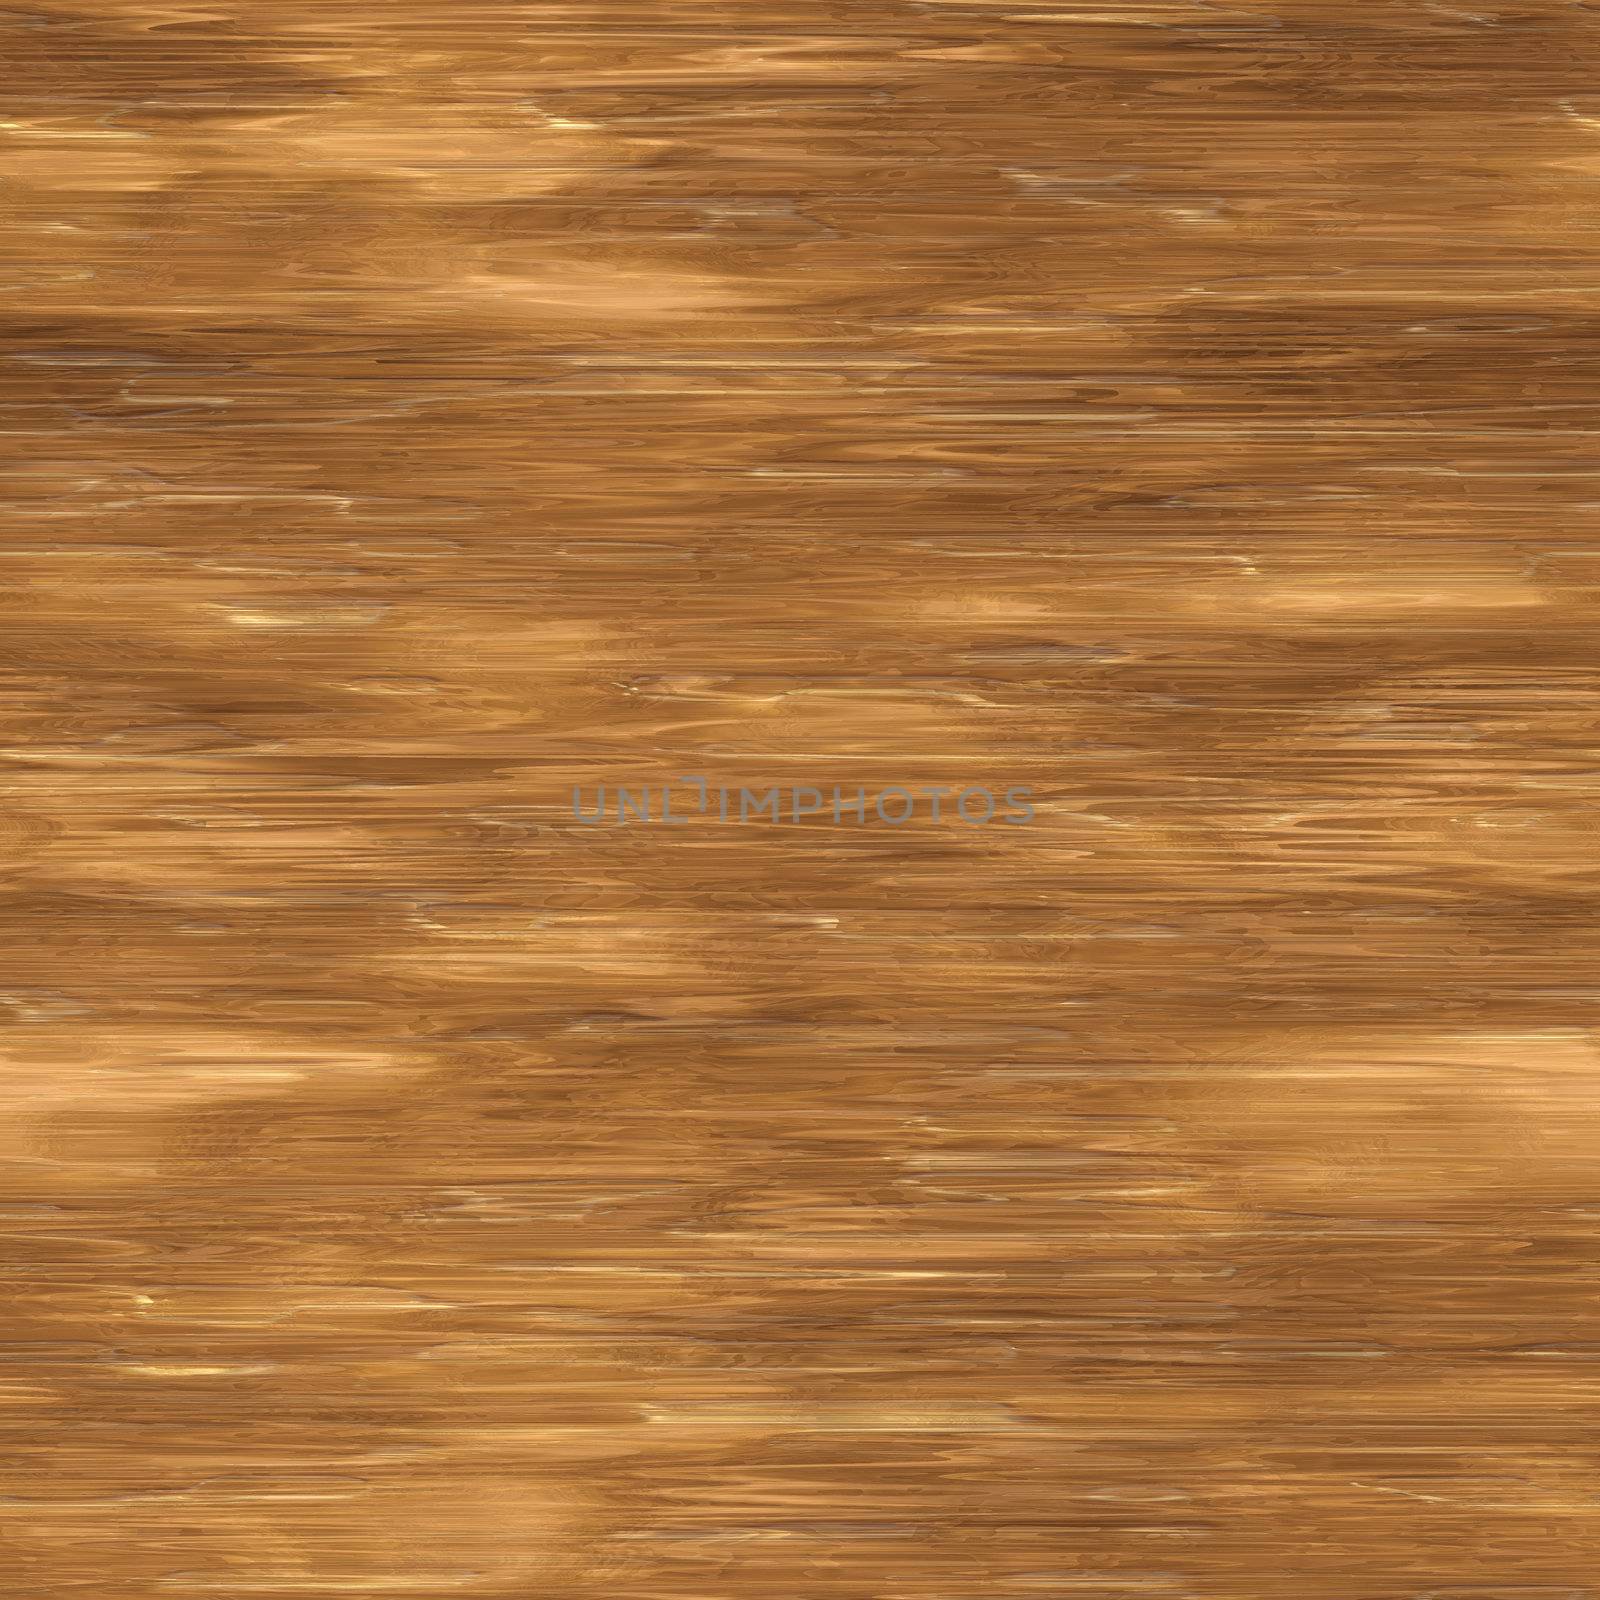 Grainy wood surface by Nanisimova